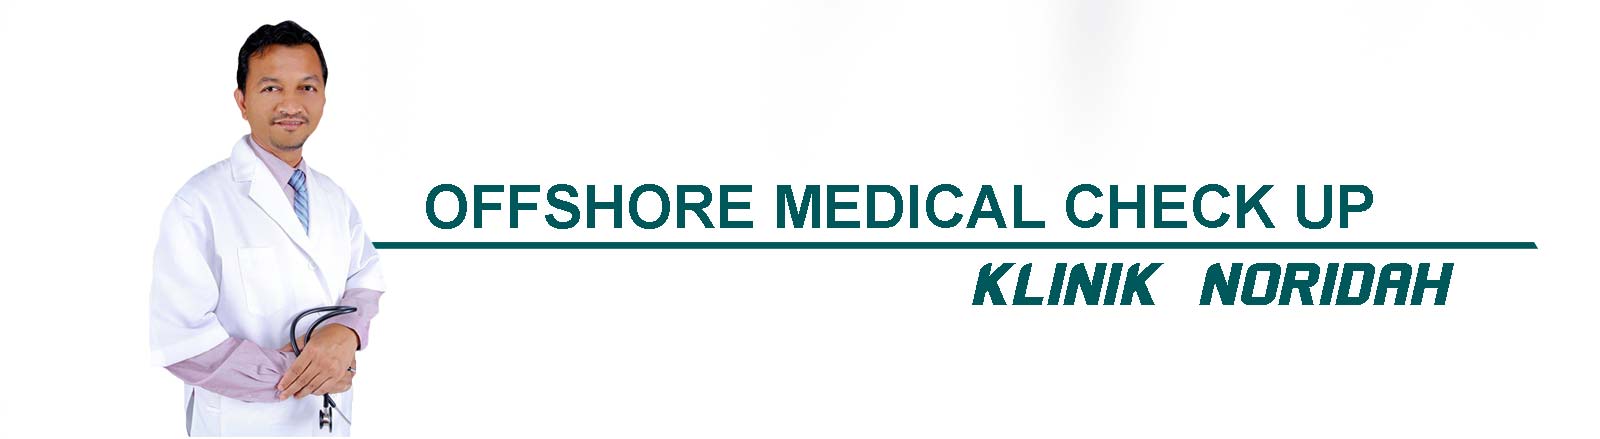 Offshore Medical Check Up Klinik Noridah